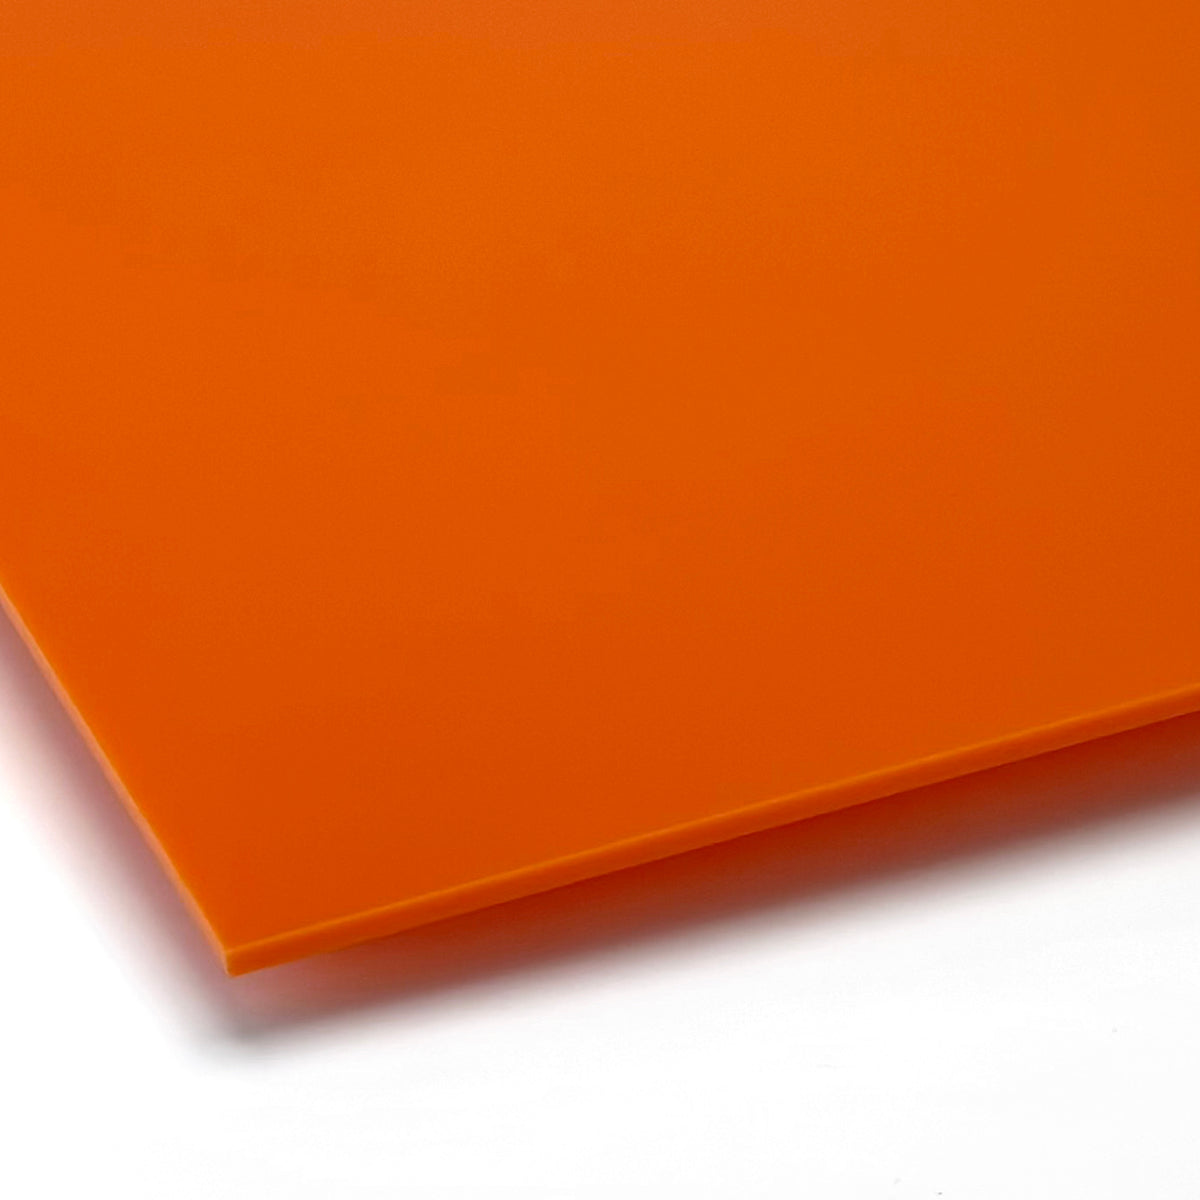 Orange Acrylic with laser cutting & Printing - 300x200mm